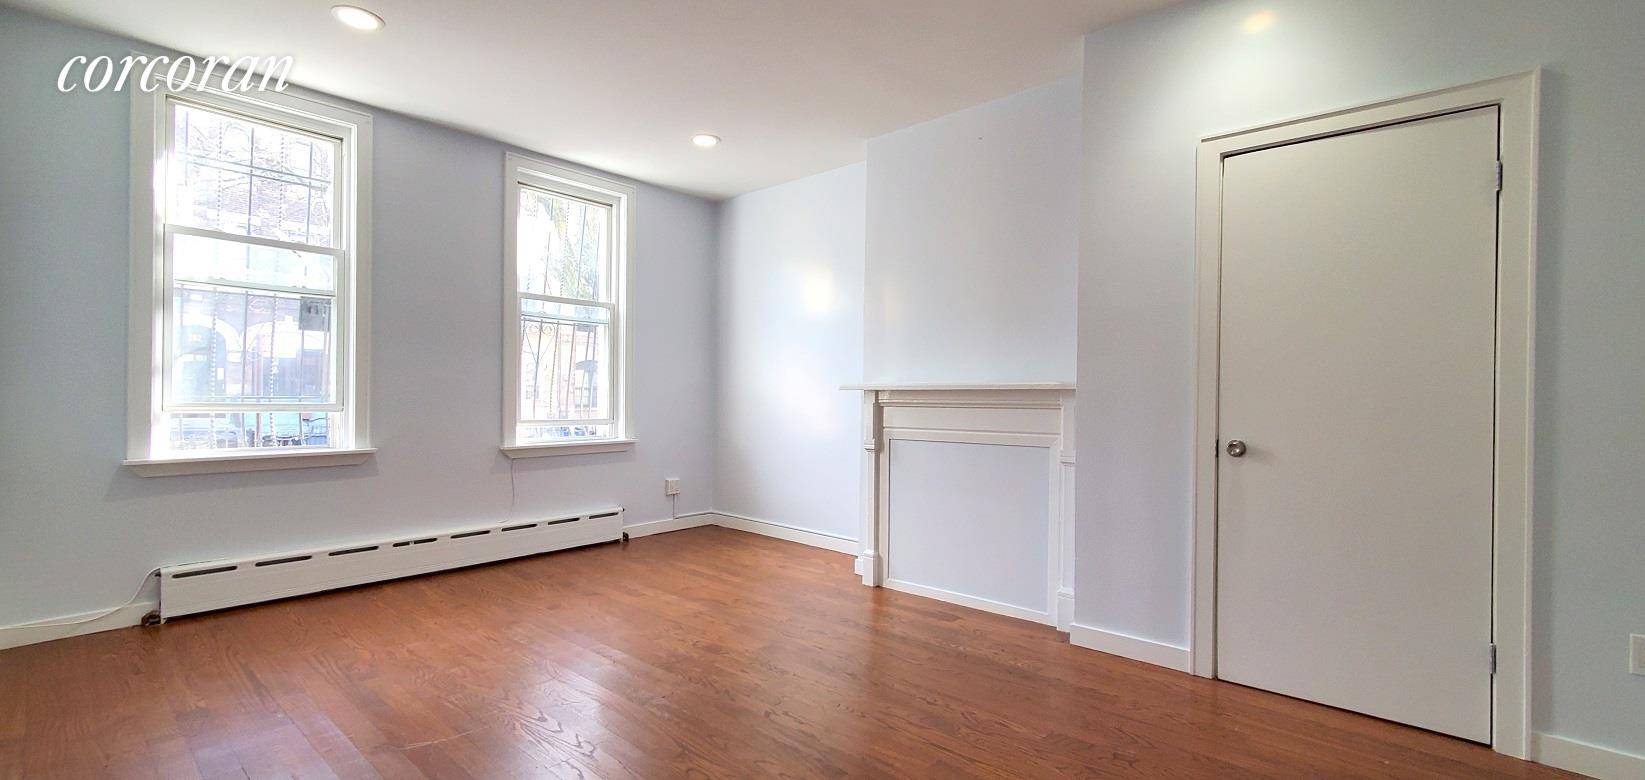 Welcome to 261 Cornelia Street in Bushwick a spacious 3 bedroom home in the heart of Brooklyn.